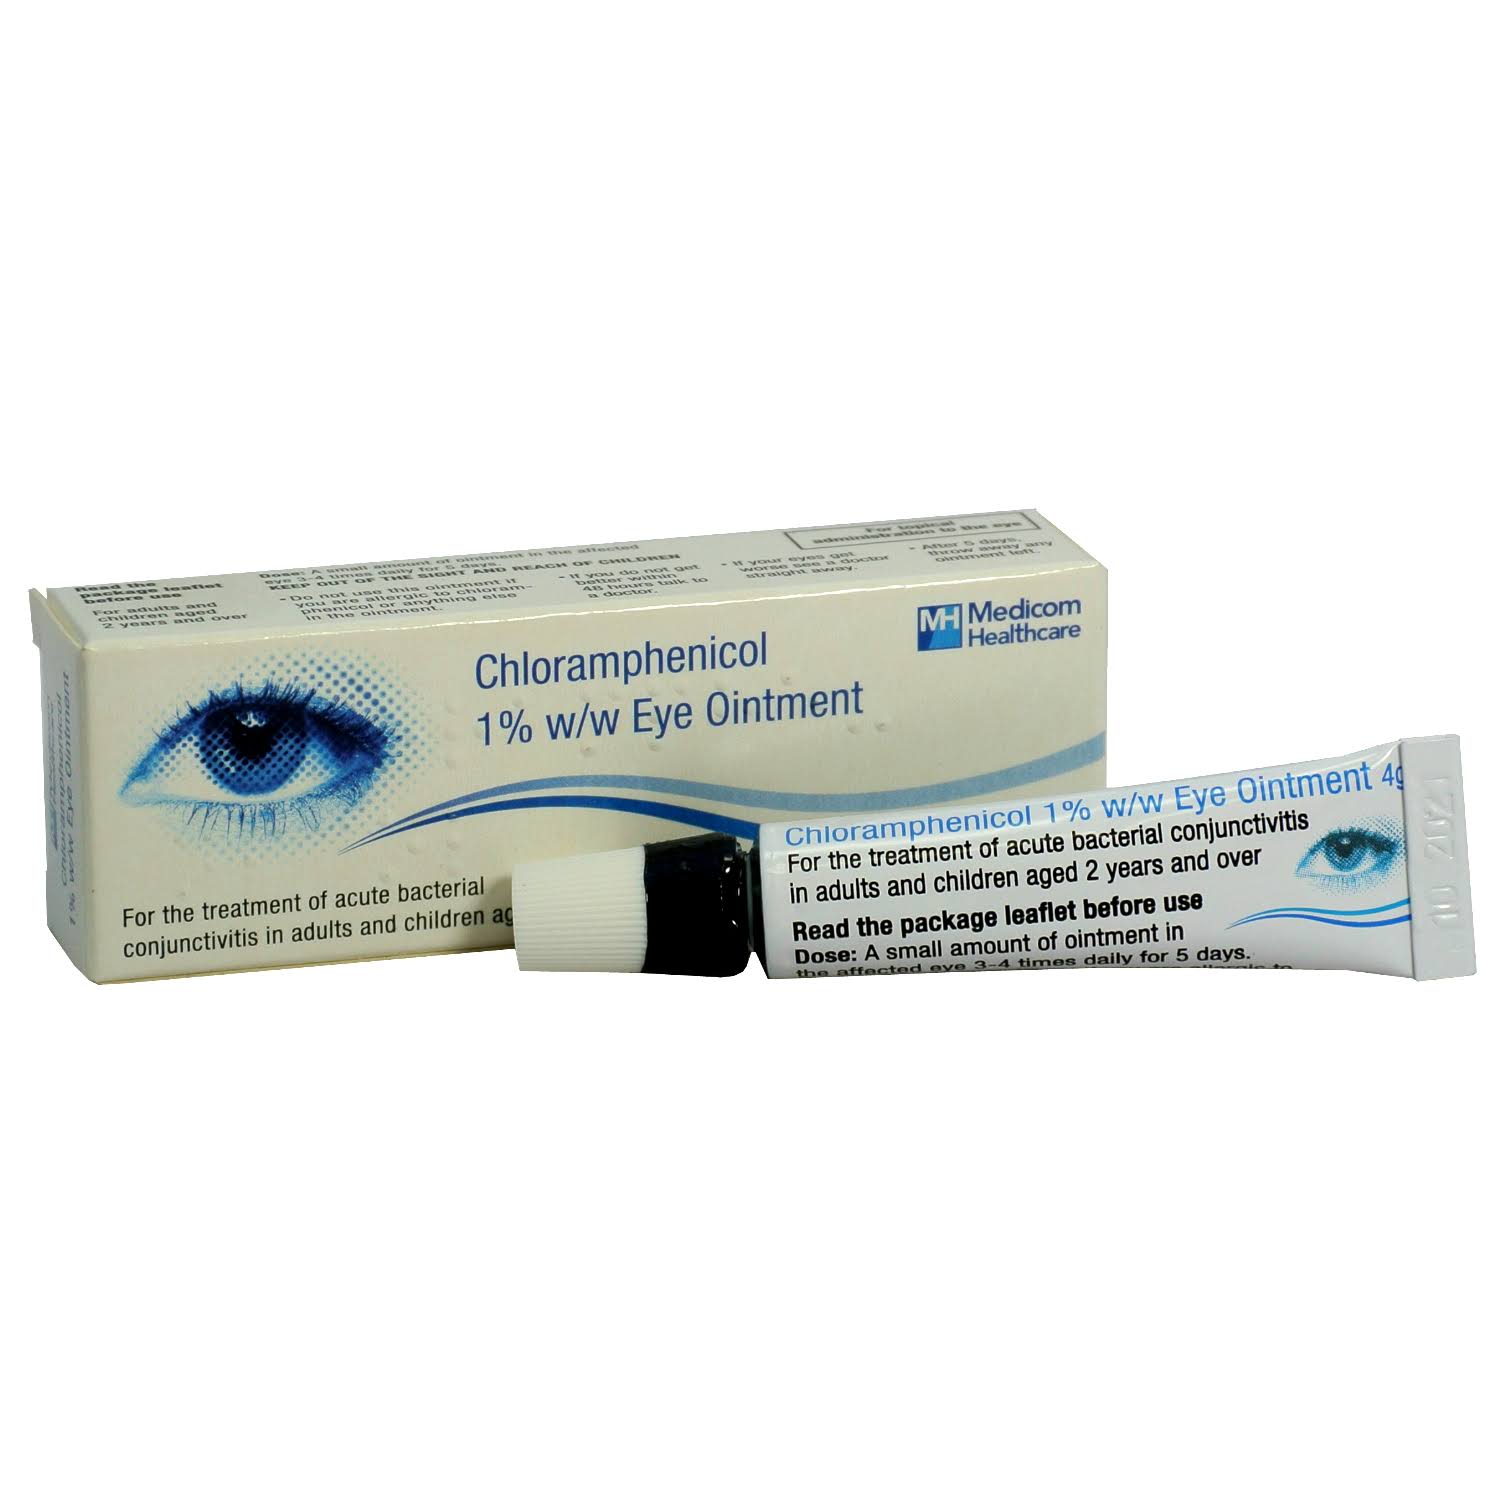 Chloramphenicol Eye Ointment - 4g